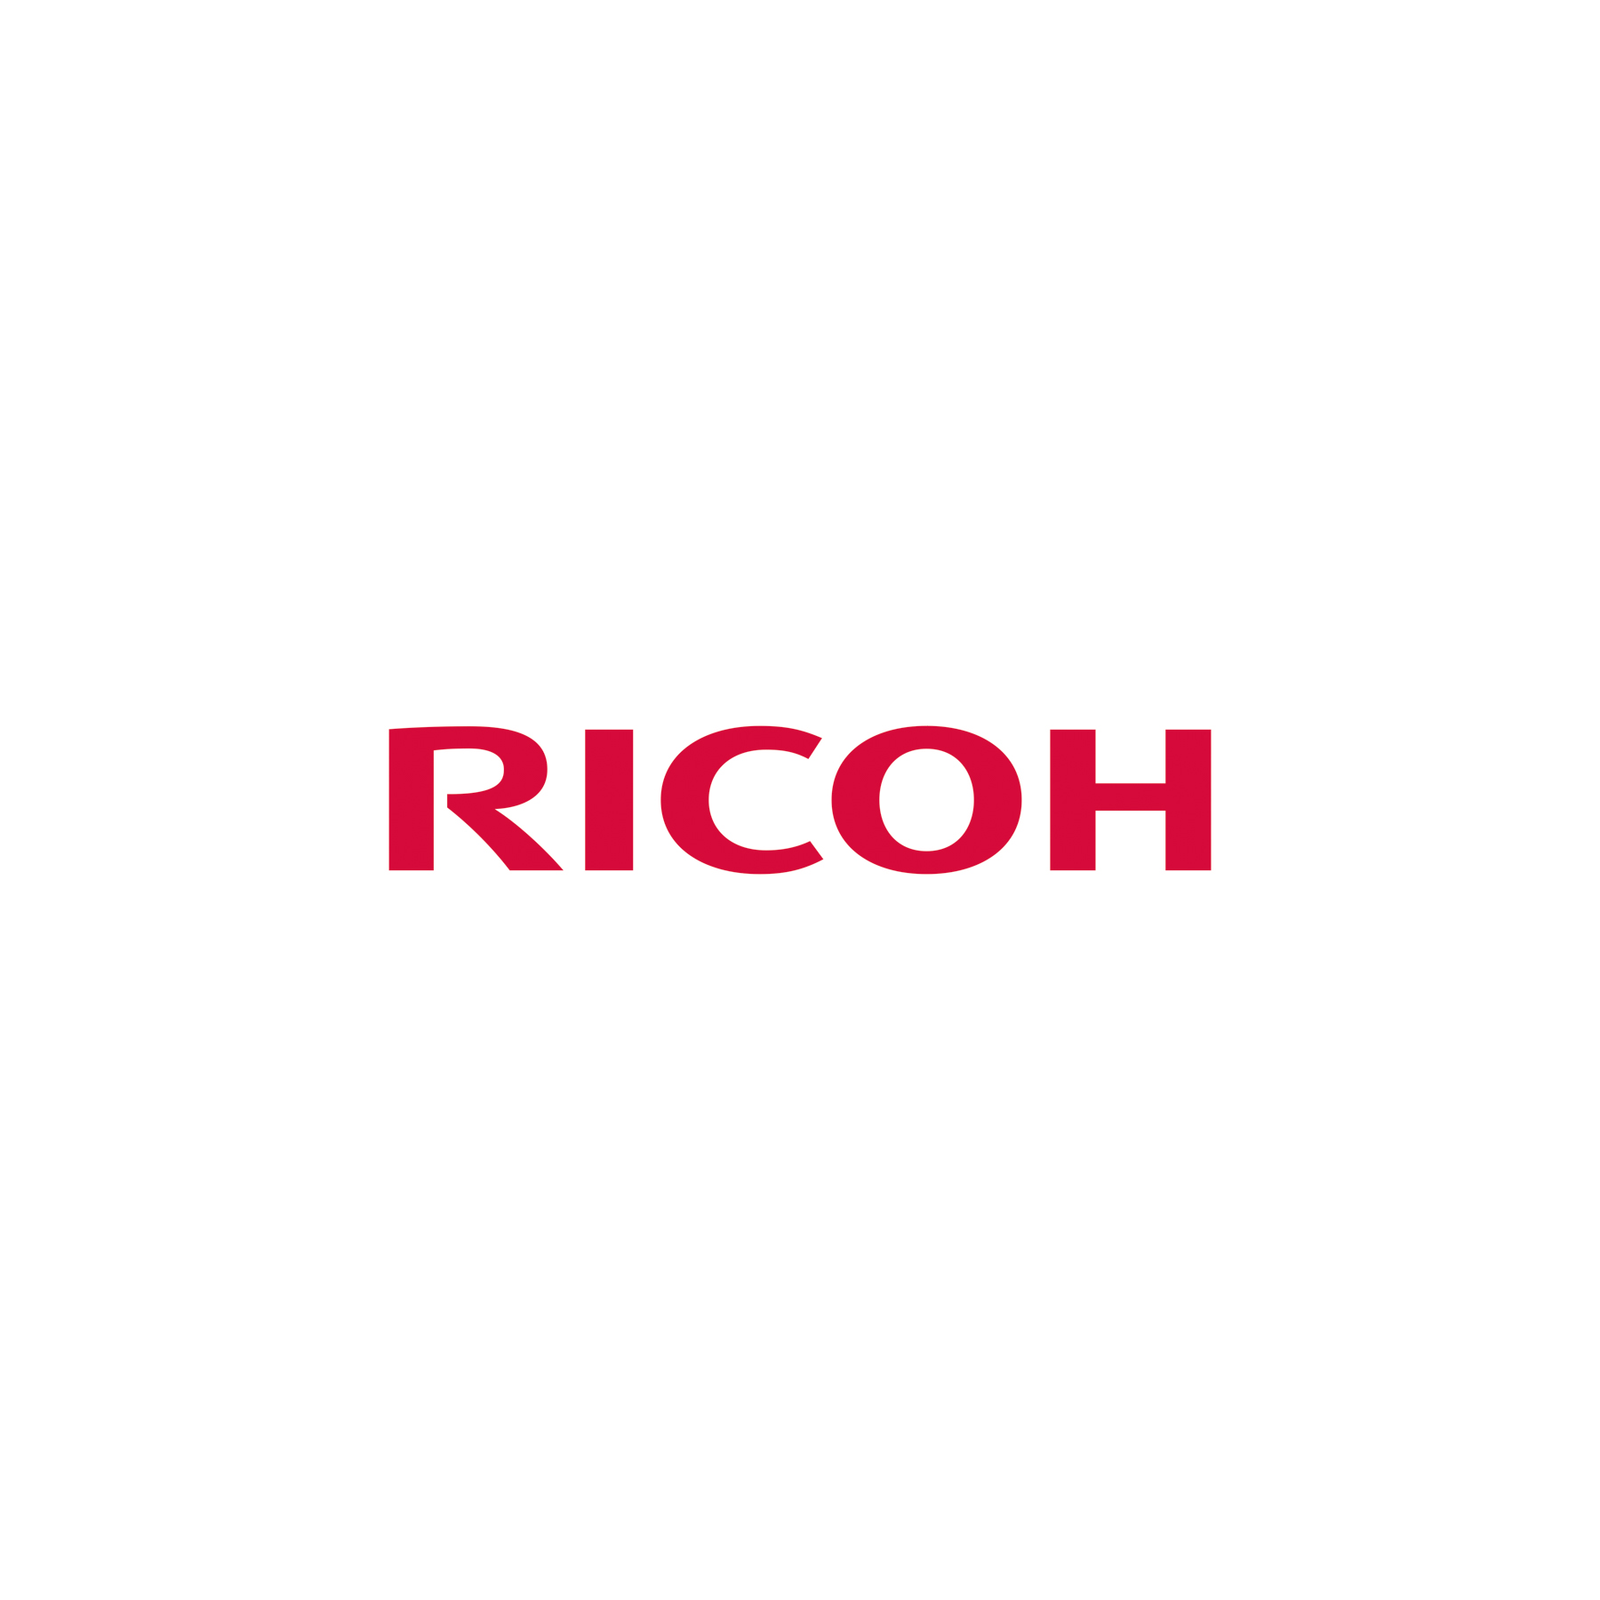 Ricoh - Toner For Printers